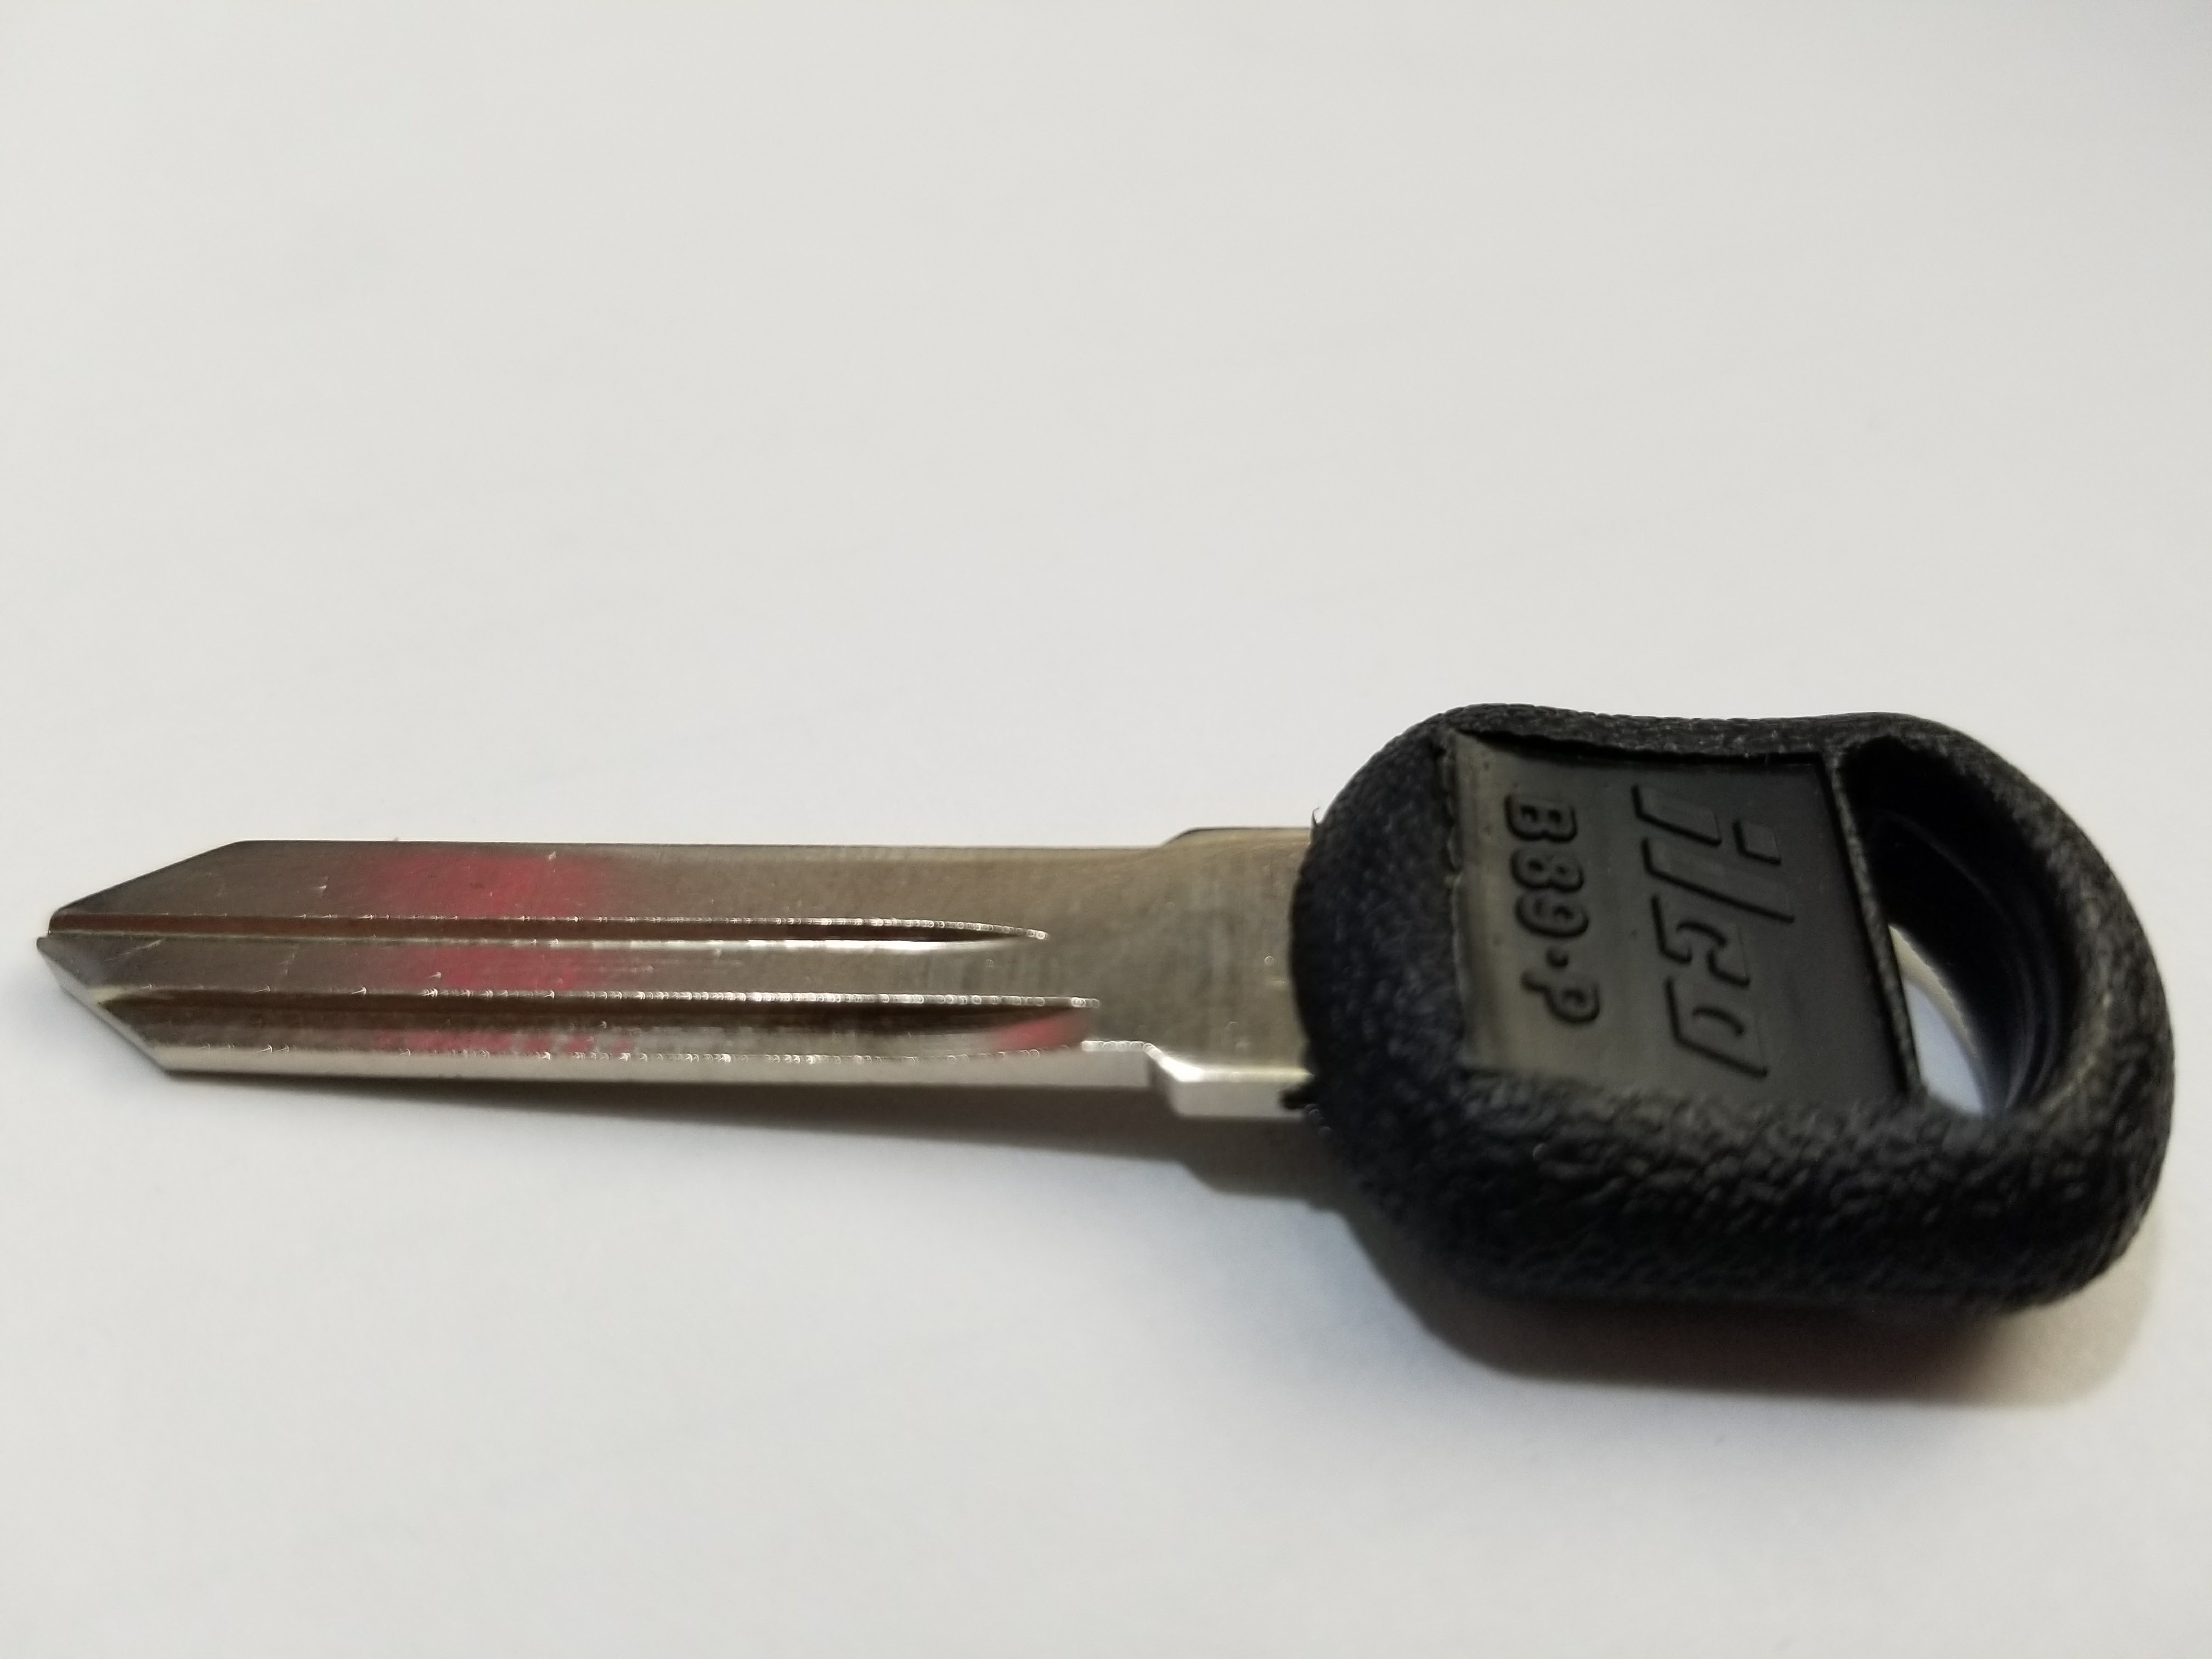 Lost Chevy Cavalier key